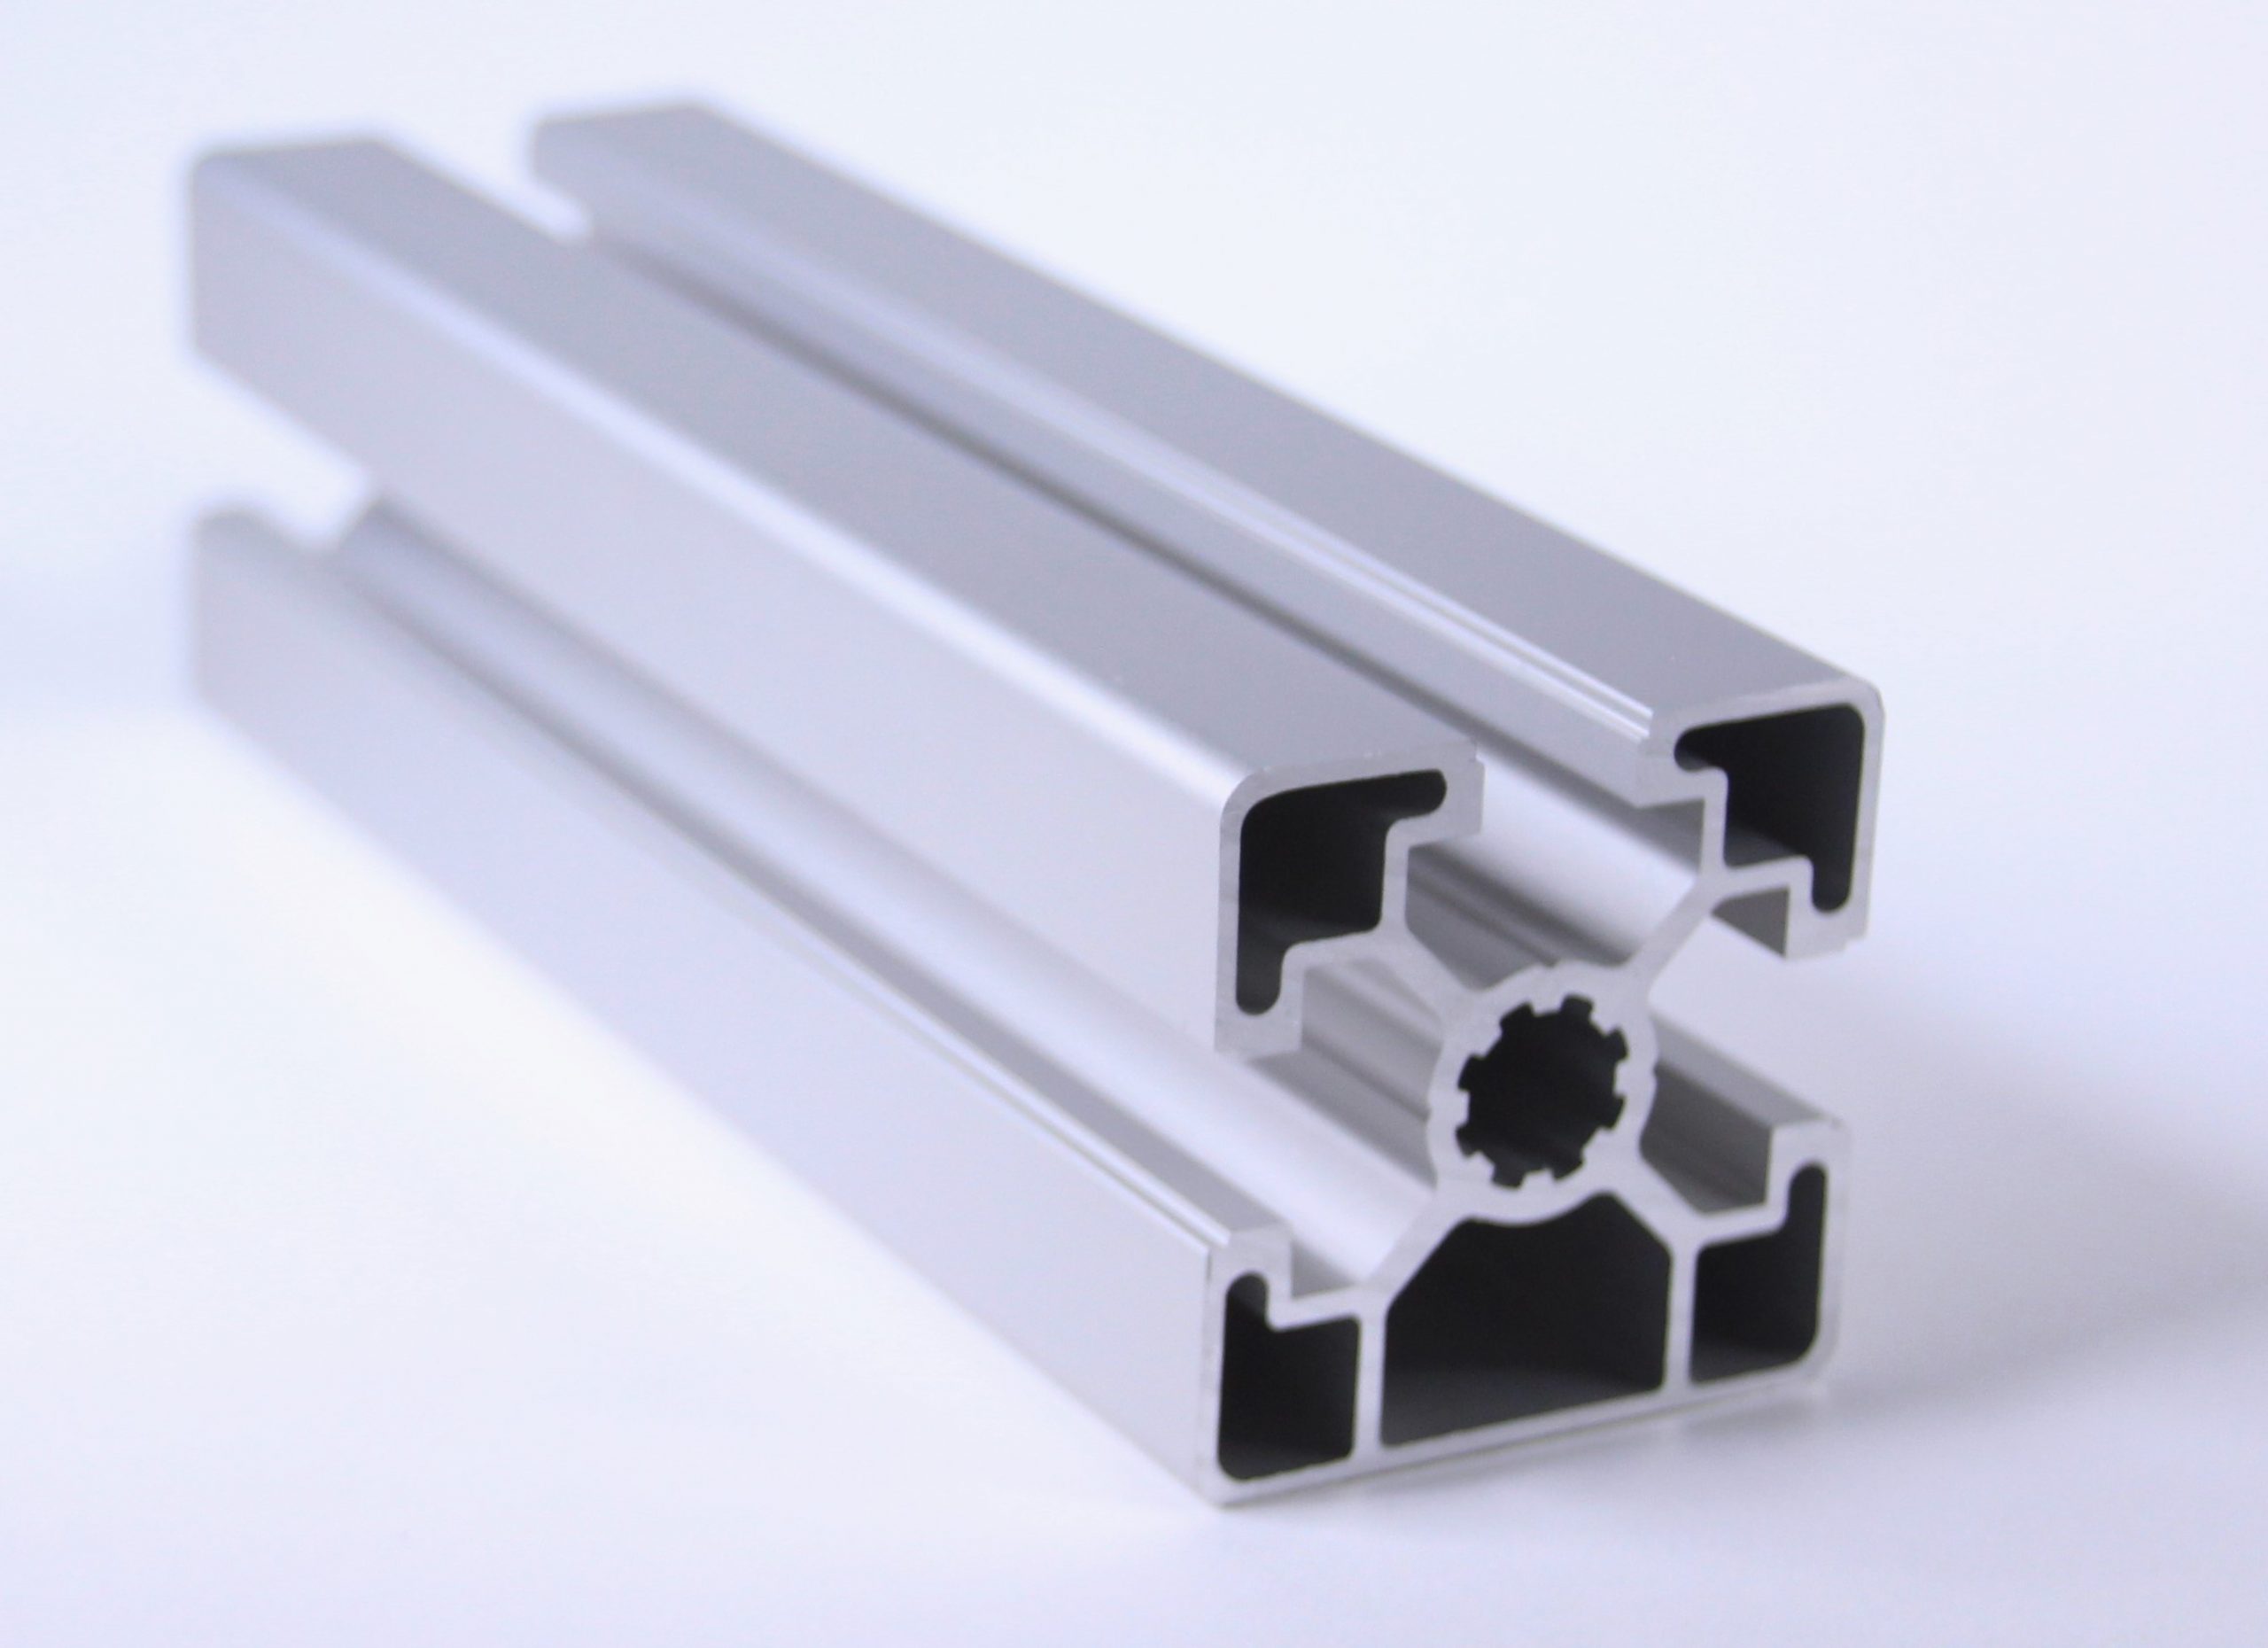 TSLOTS 45mm x 45mm Light Trislot 10mm tslot Aluminum Framing Profile